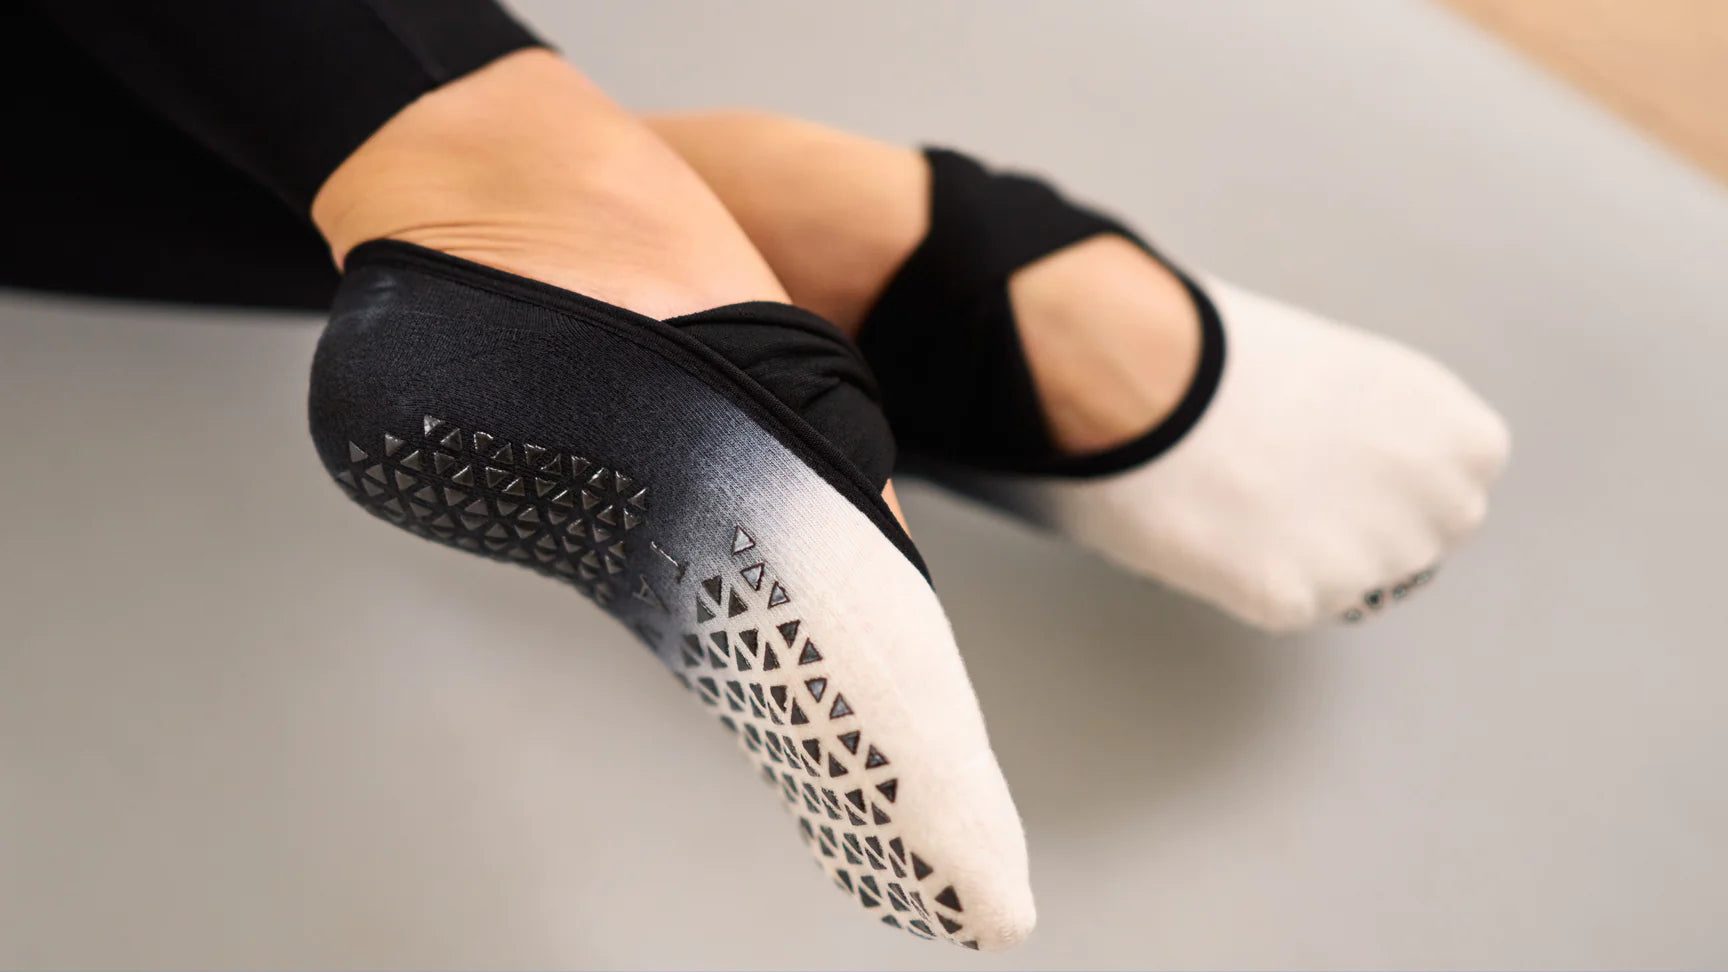 Yoga Socks  Yoga and Pilates Socks –